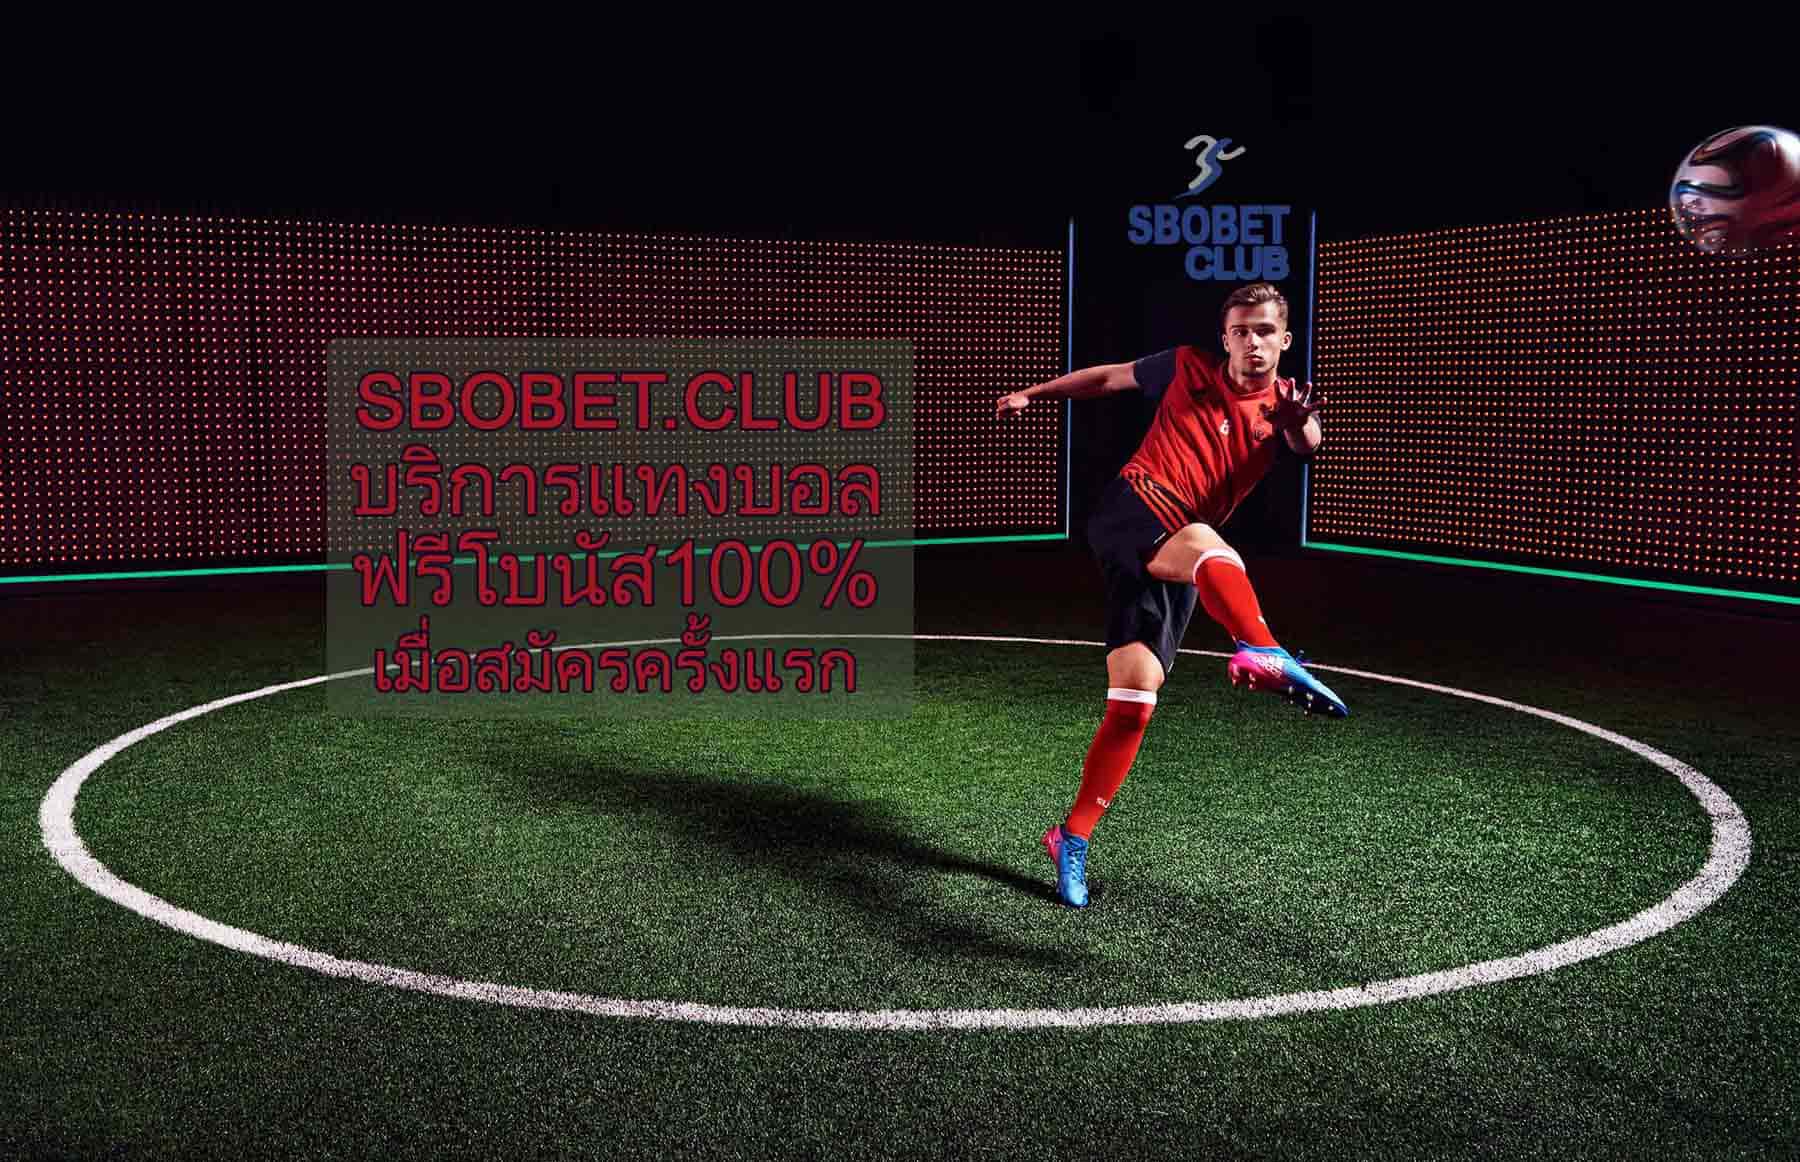 sbobet club player football